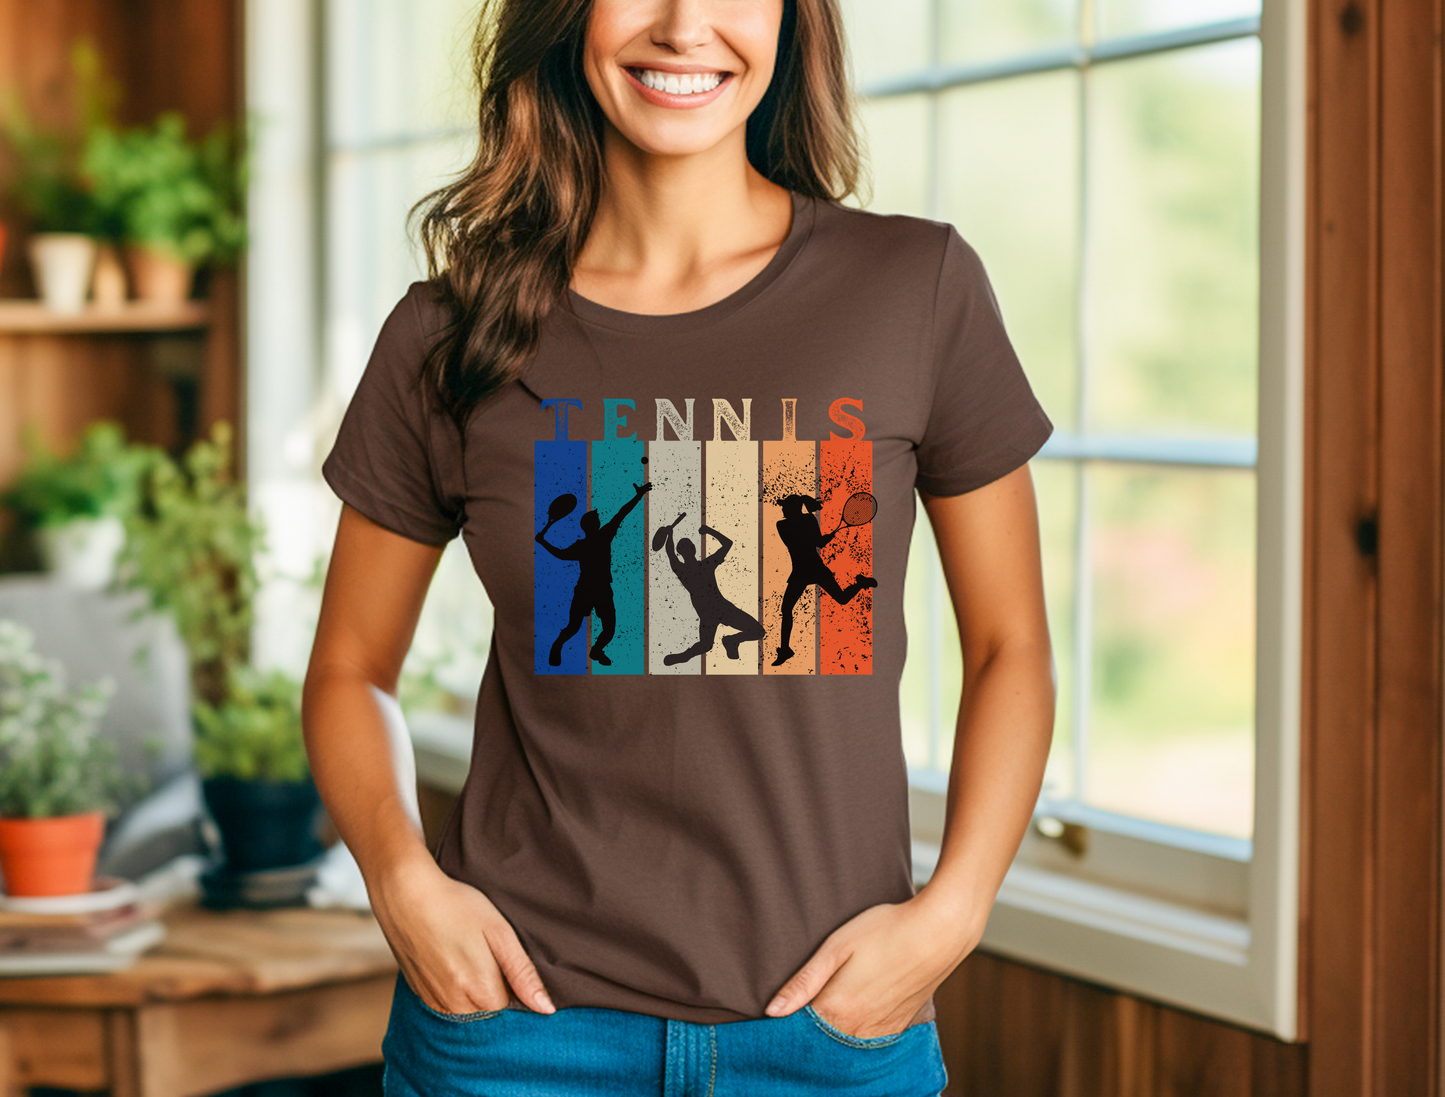 Tennis Retro Rainbow T-Shirt